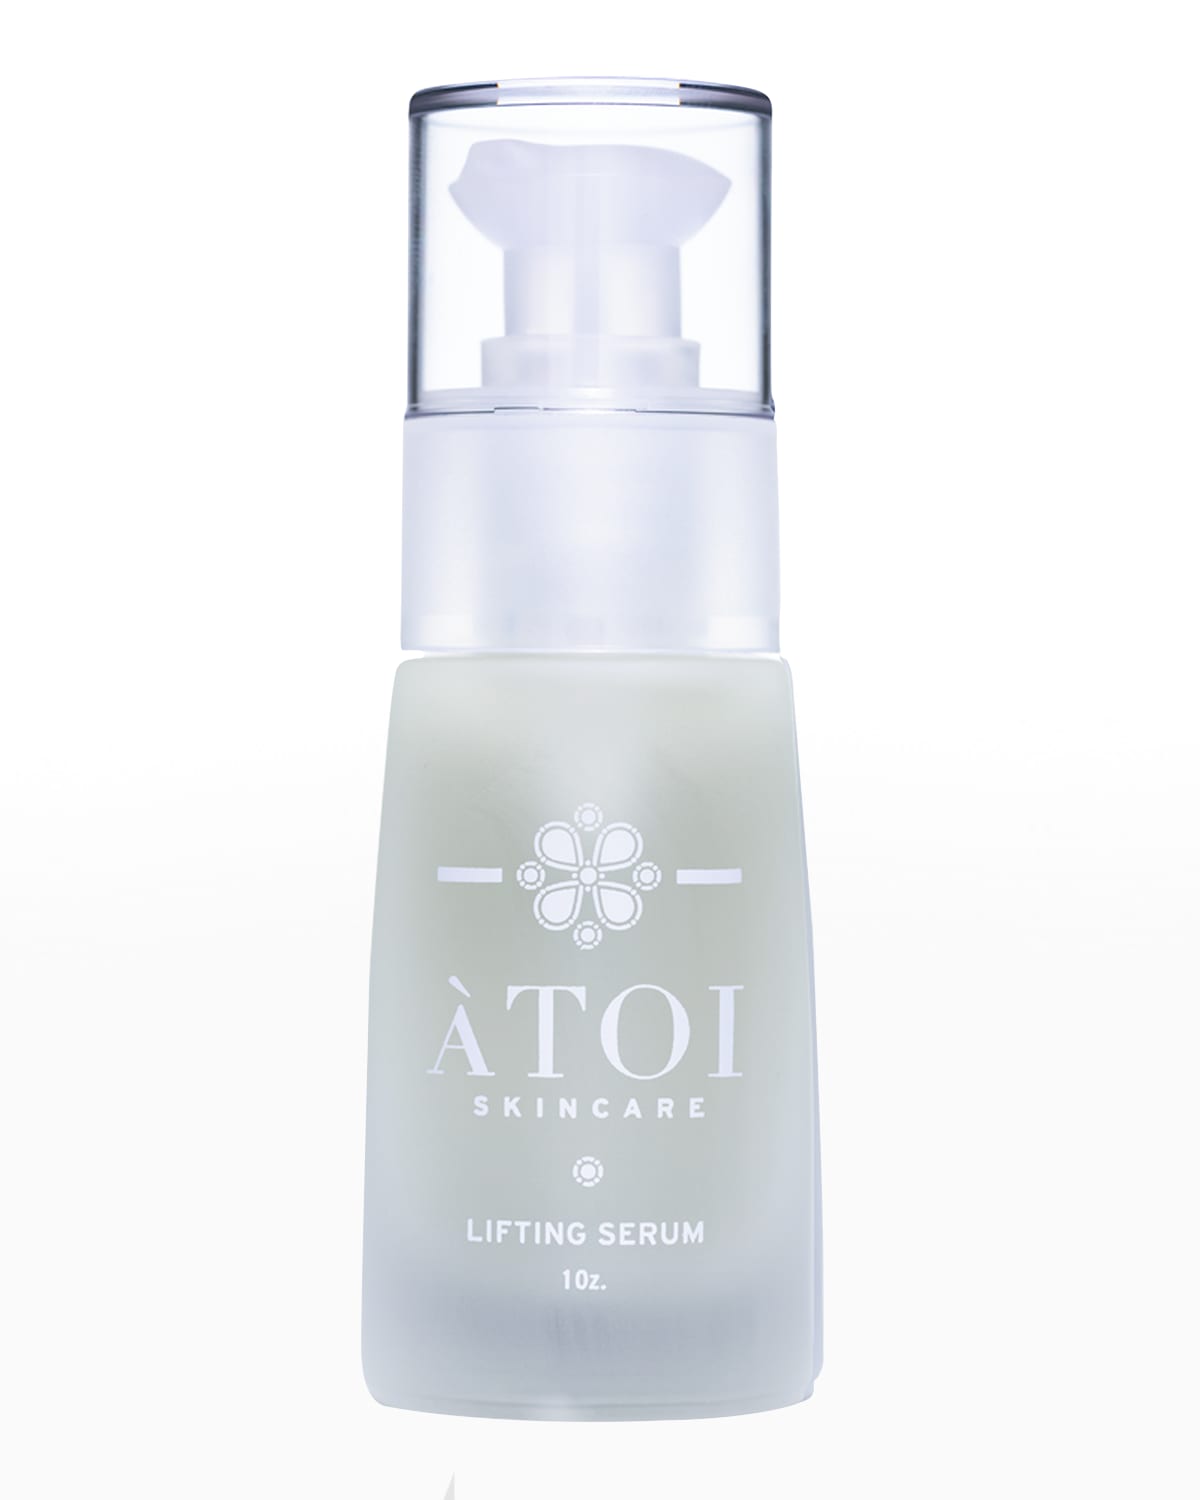 ATOI Skincare Lifting Serum, 1 oz.